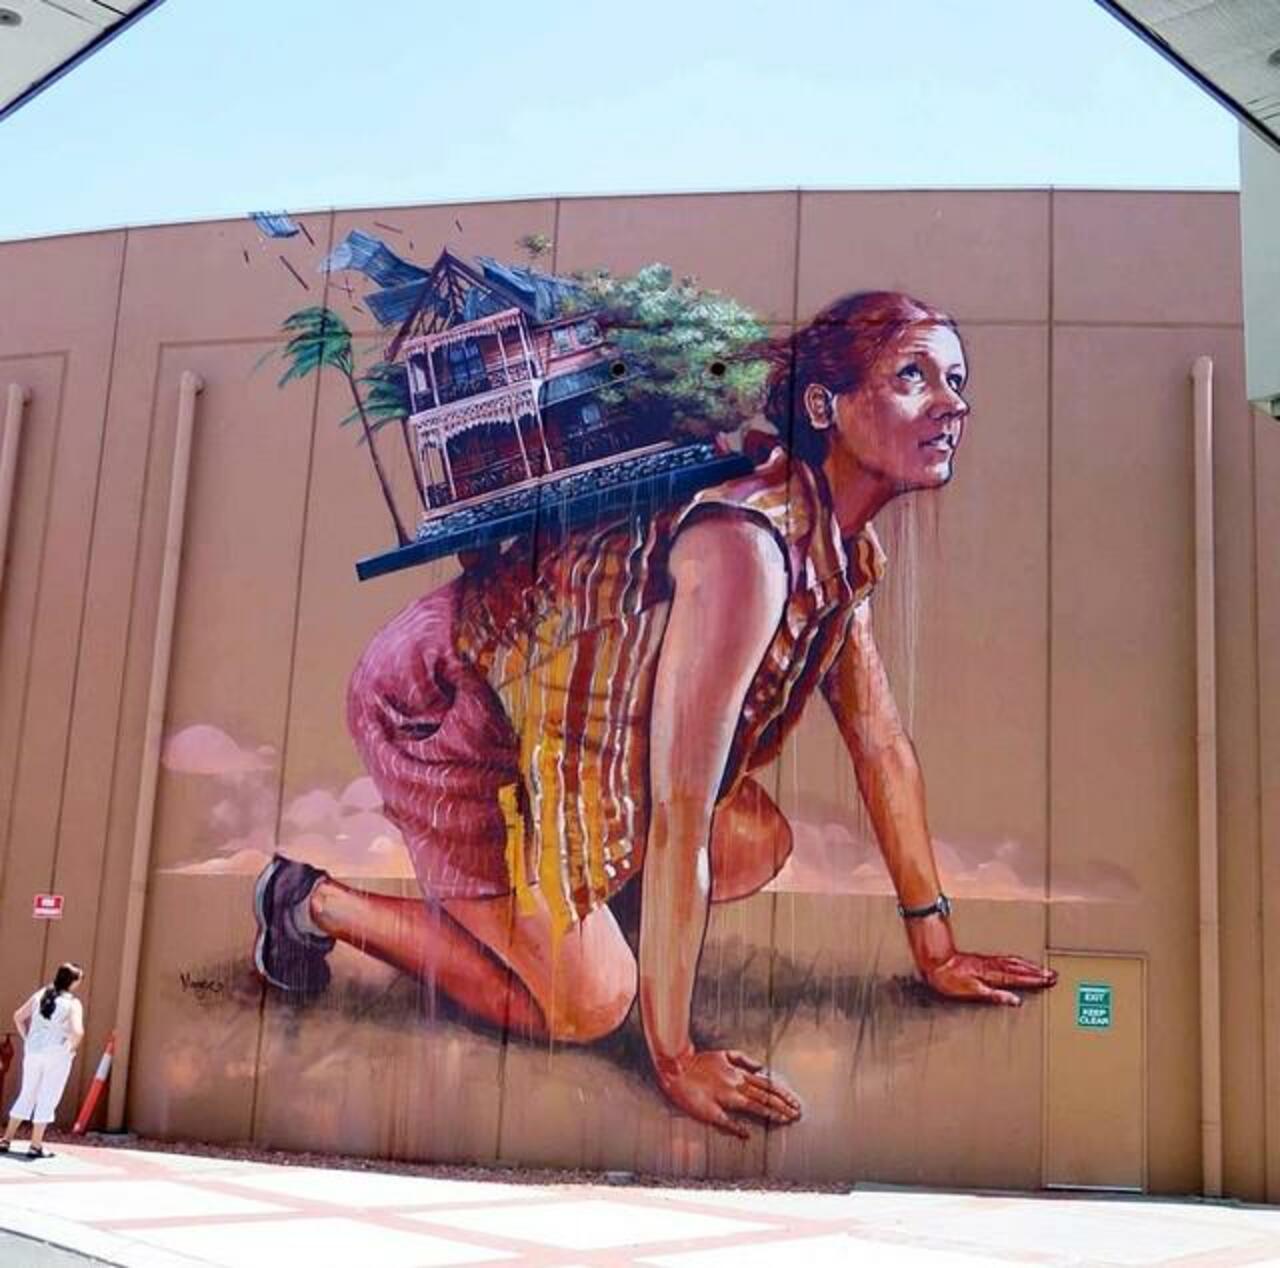 Sistemas4s: Latest Fintan Magee massive Street Art piece in Bunbury, Western Australia 

#art #graffiti #mural #st… http://t.co/l9cPB7bpwV